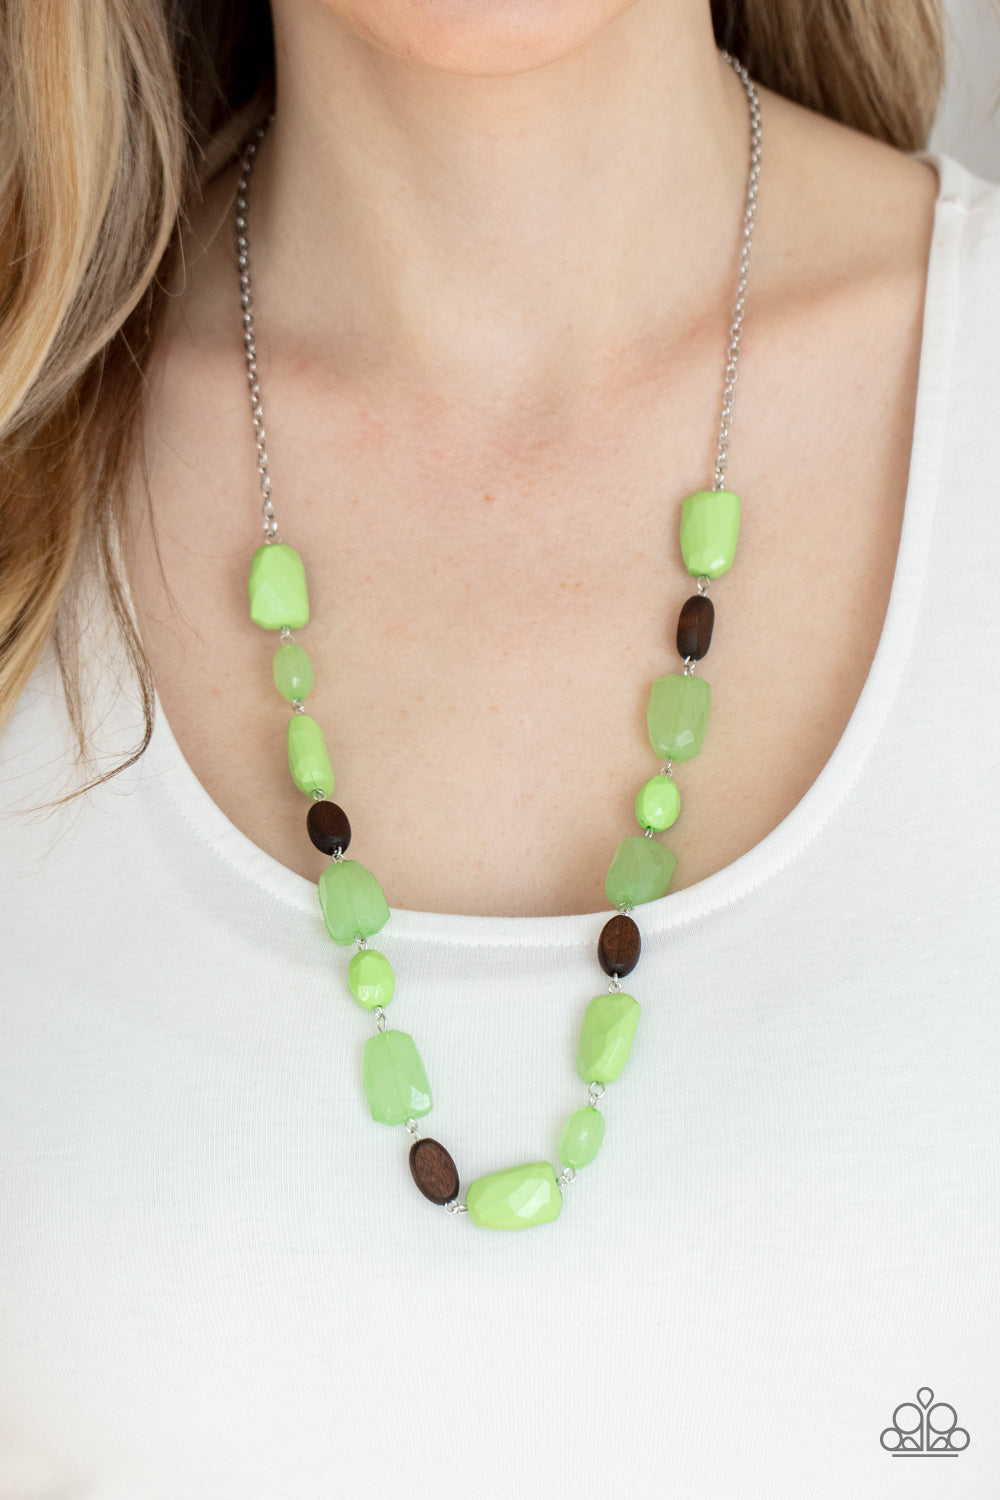 PRE-ORDER - Paparazzi Meadow Escape - Green - Necklace & Earrings - $5 Jewelry with Ashley Swint